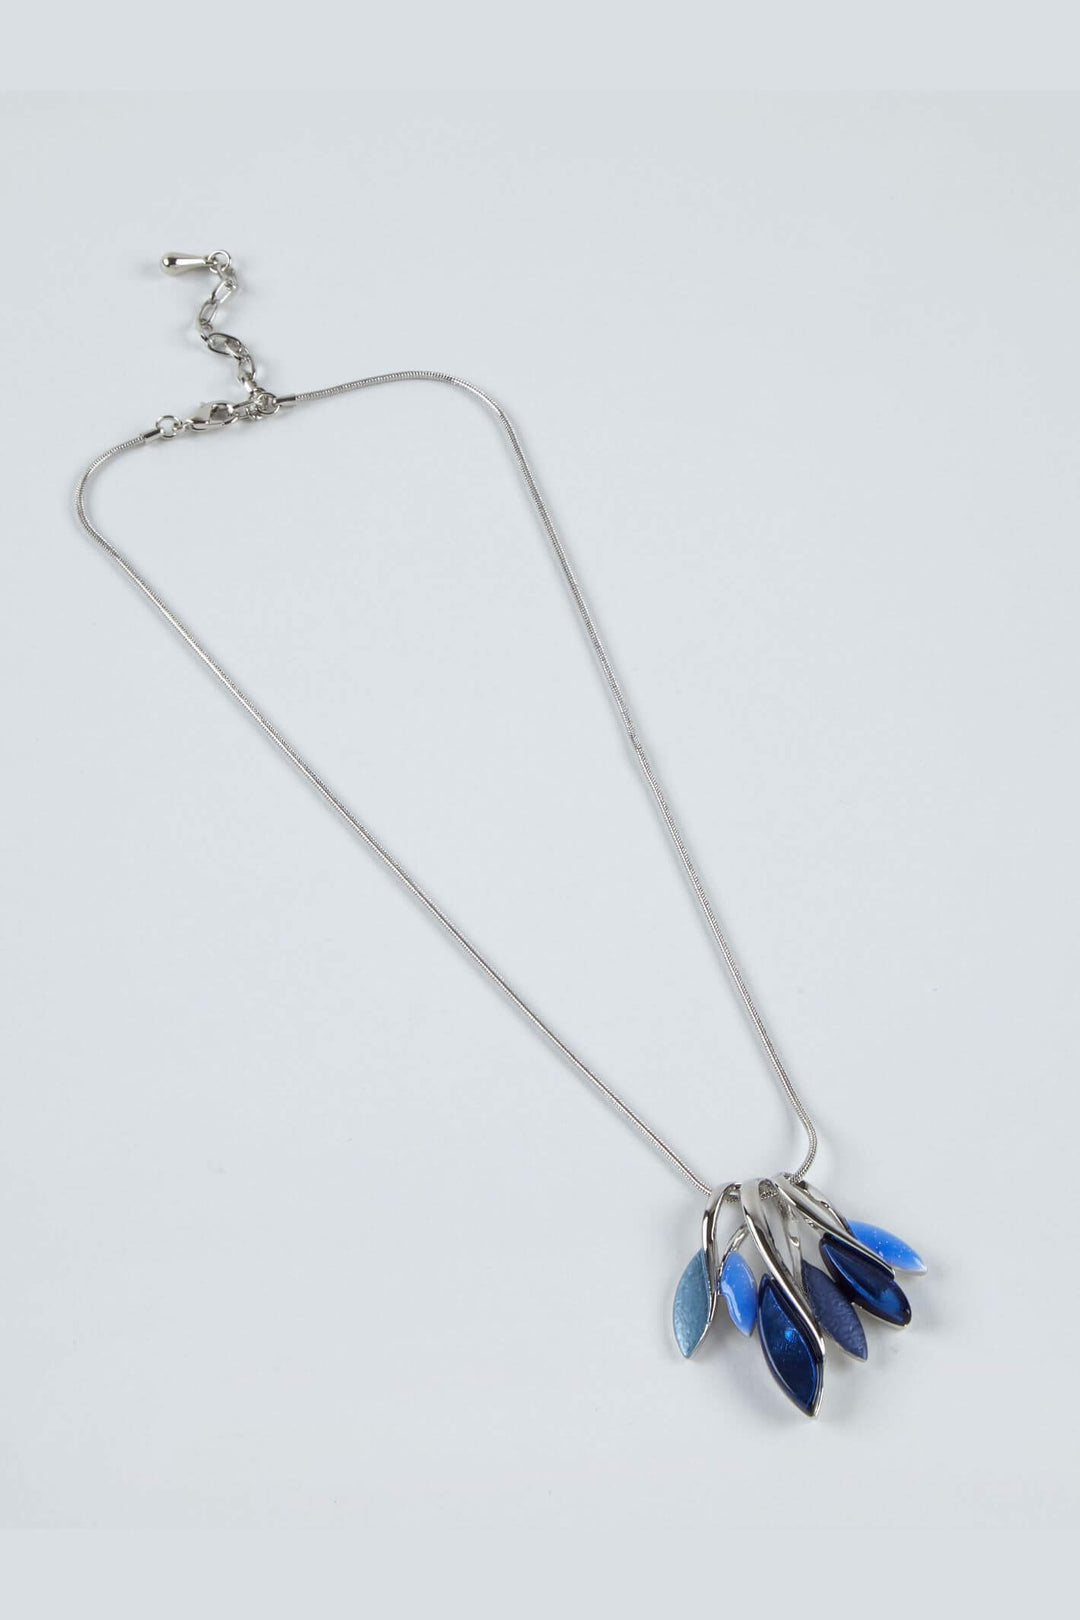 Dante NL53427 Blue Crystal Drop Necklace